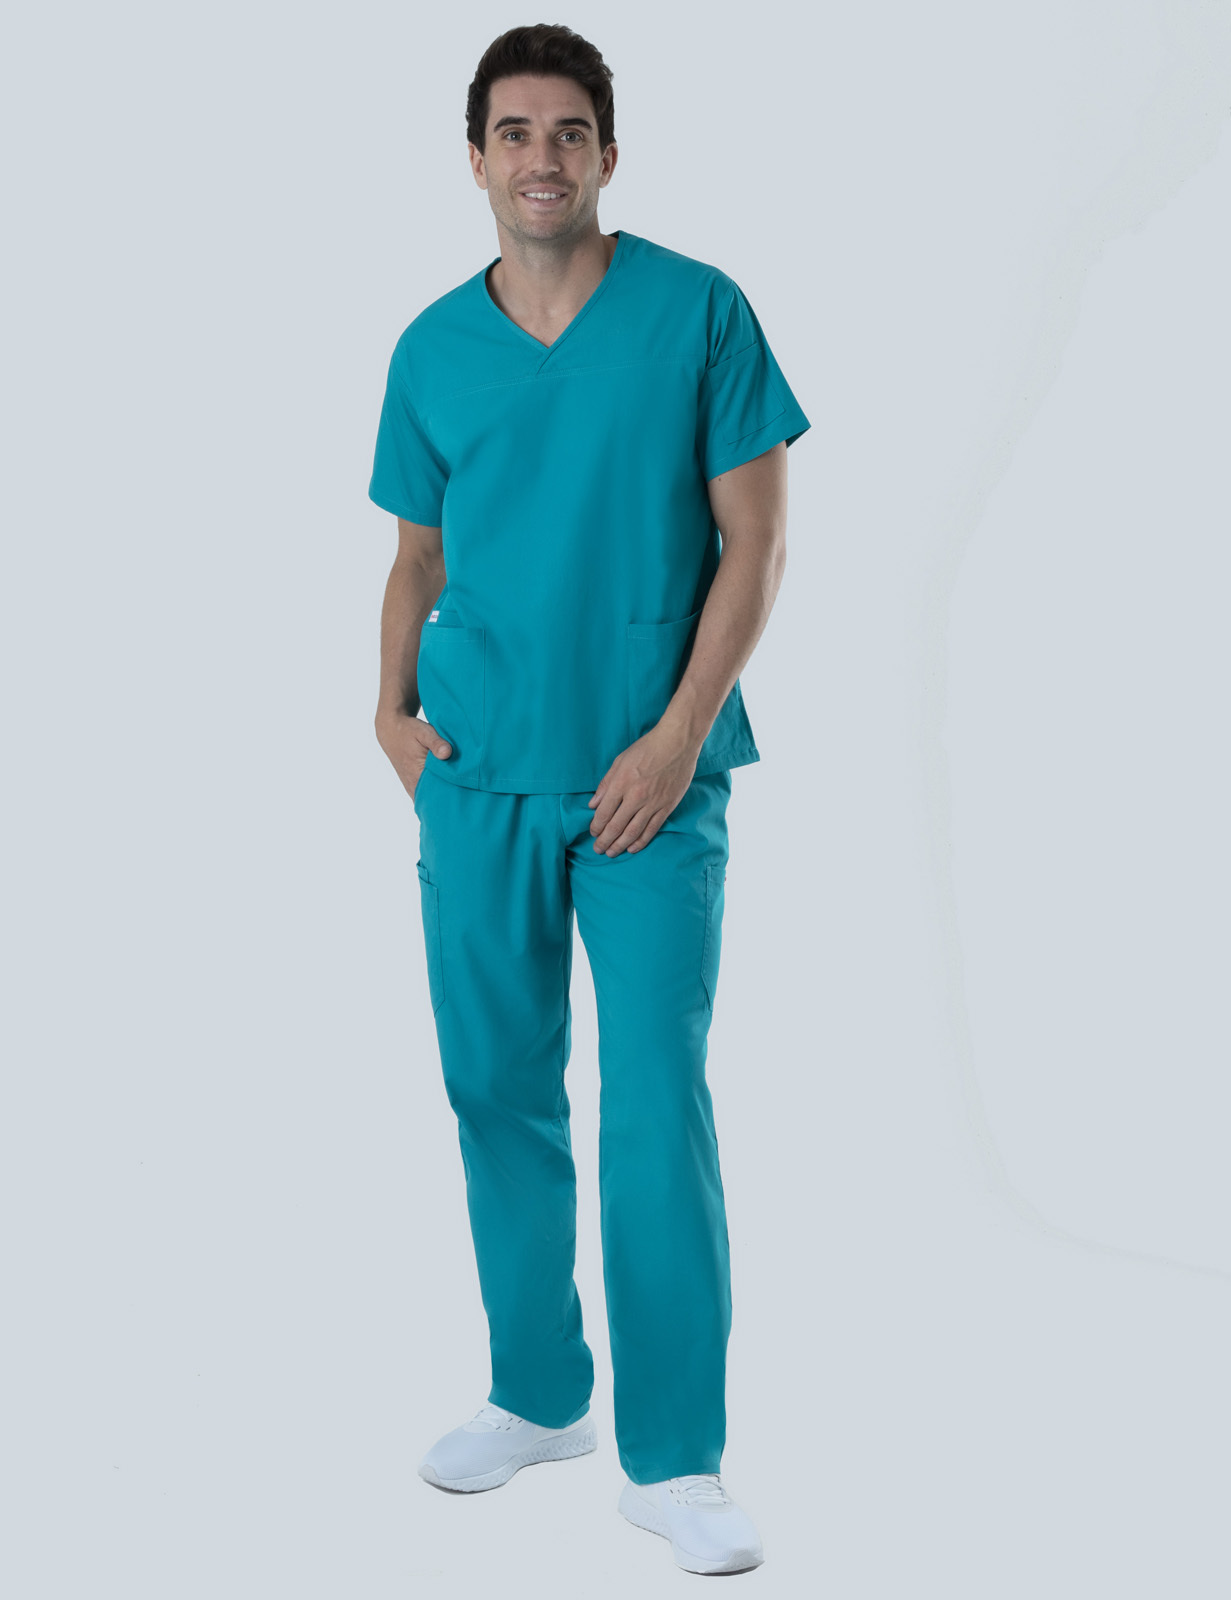 ECT Enrolled Nurse  Uniform Set Bundle (Men's Fit Solid Top and Cargo Pants in Teal + Logos)